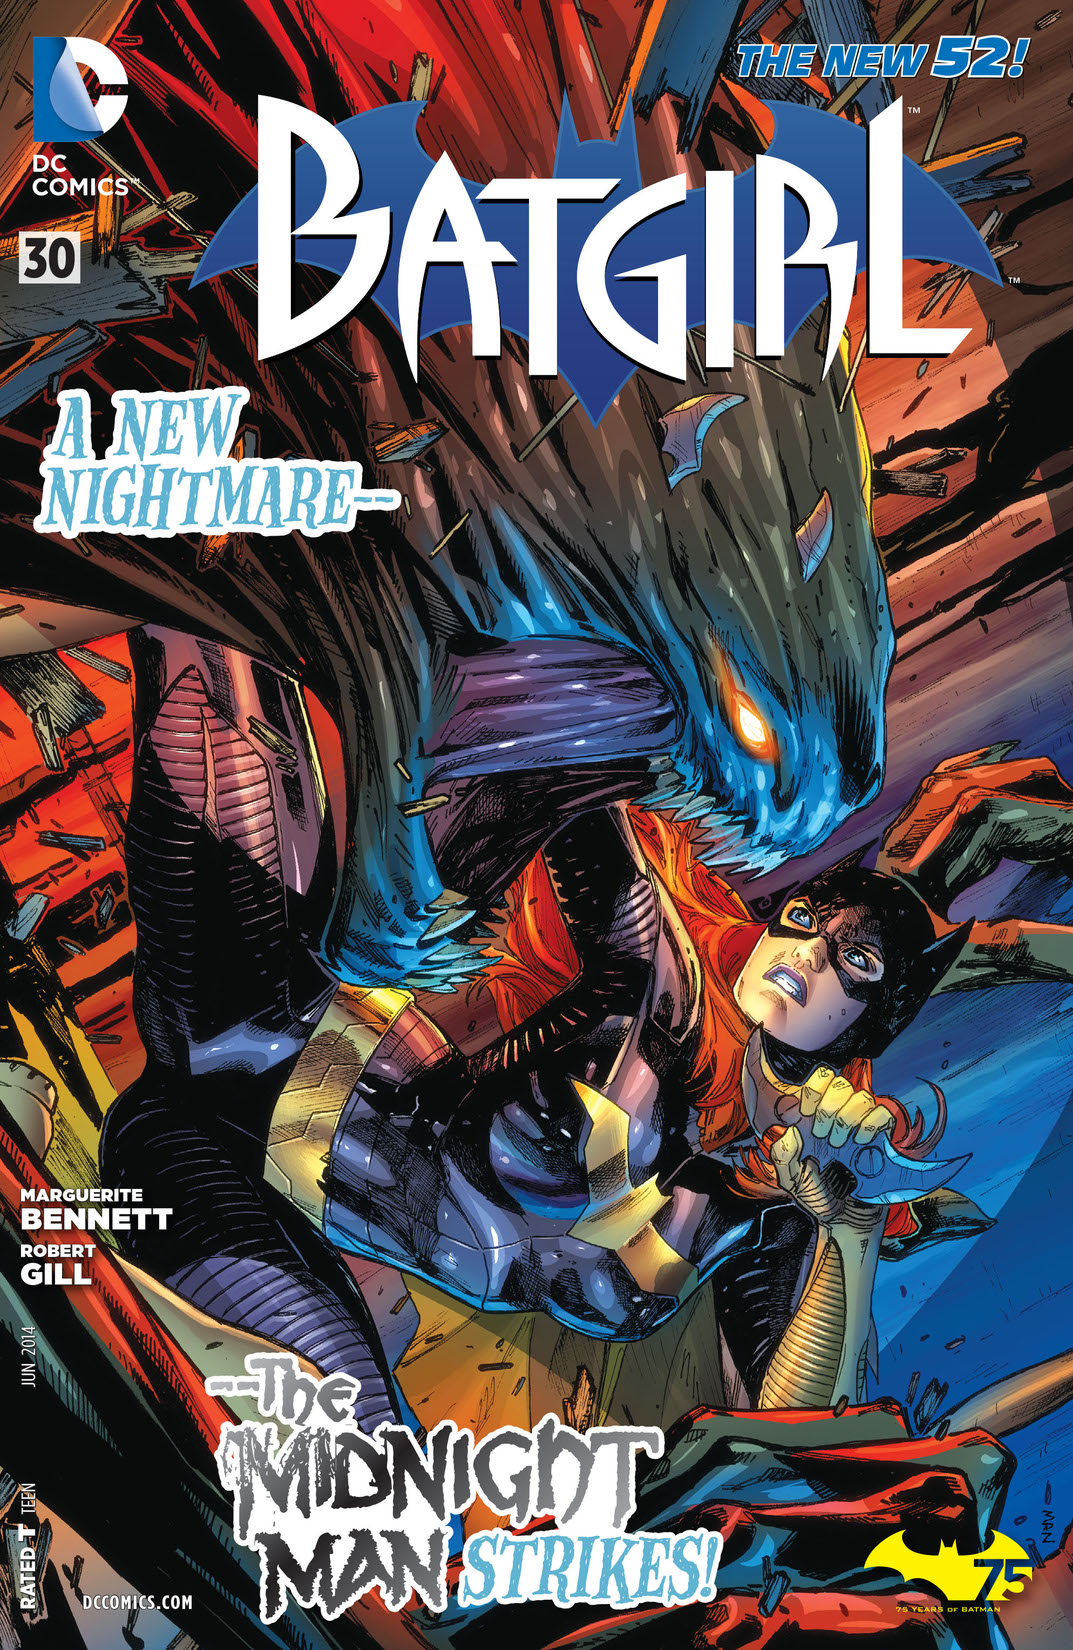 Batgirl (2011-) #30 preview images